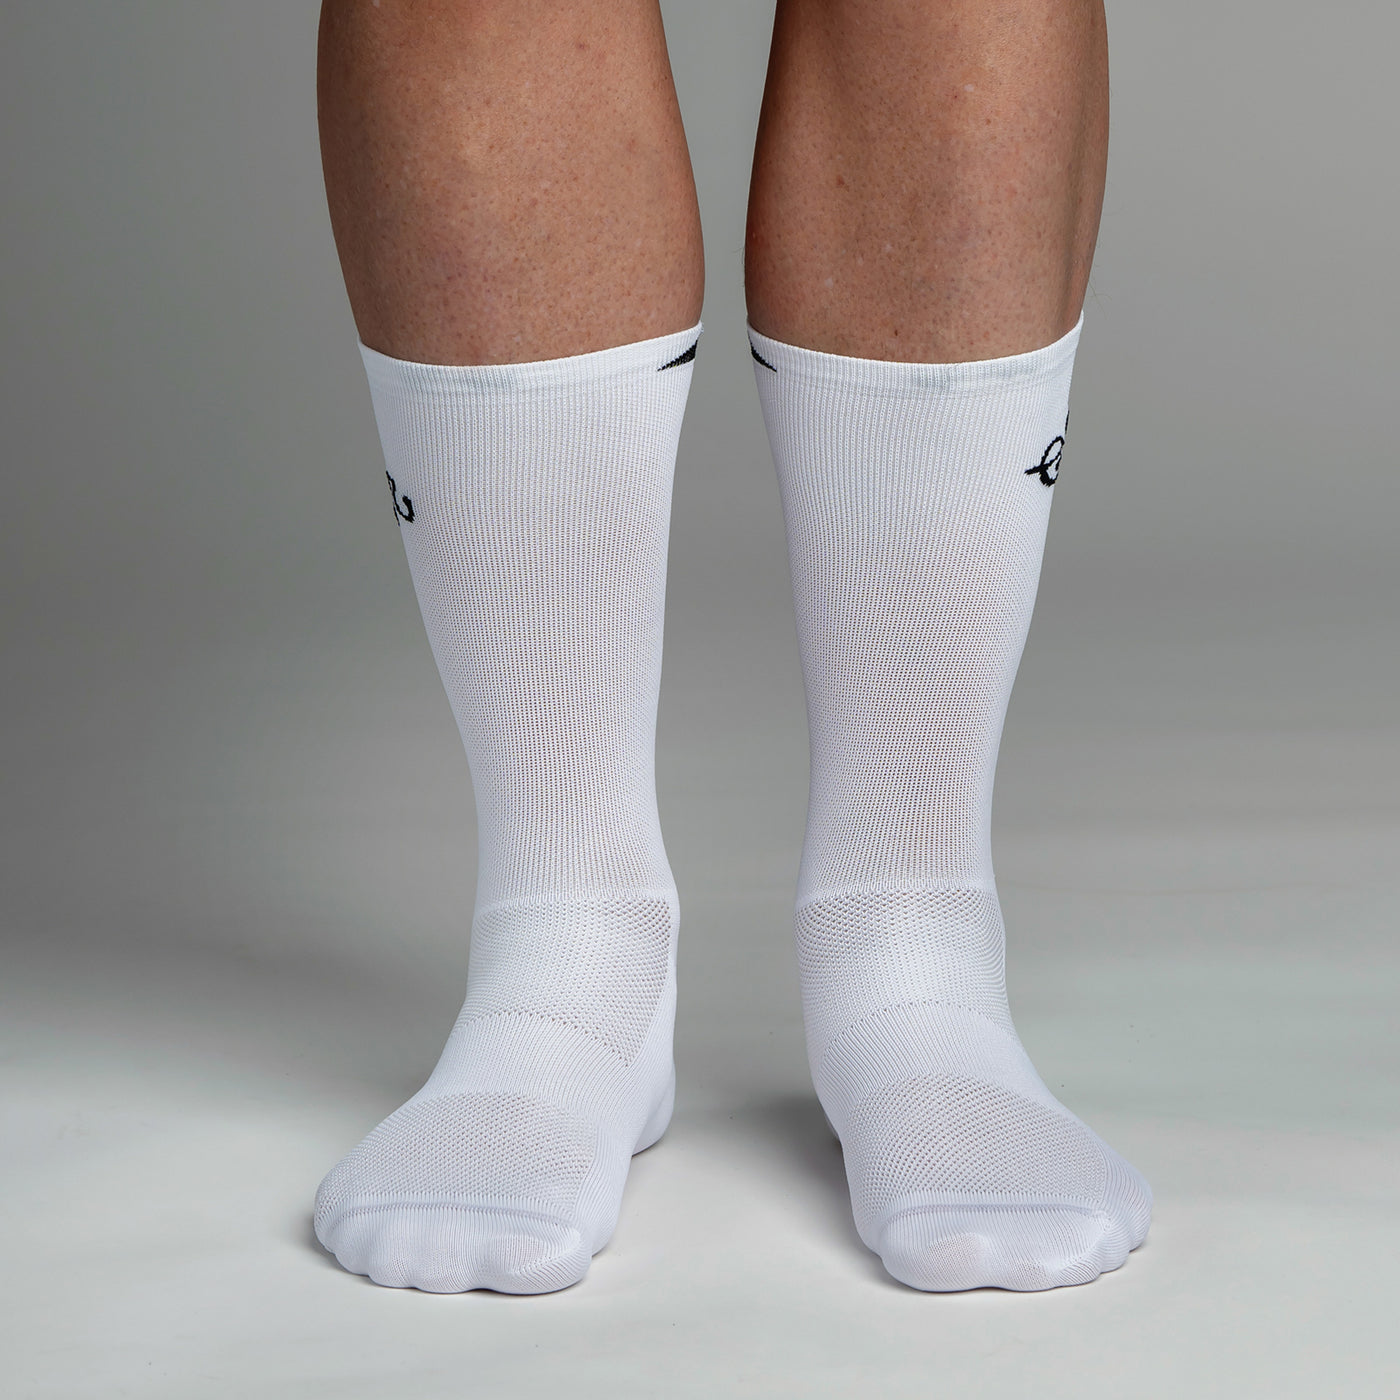 Snok - White Cycling Socks for Men - Pack of 2 pairs